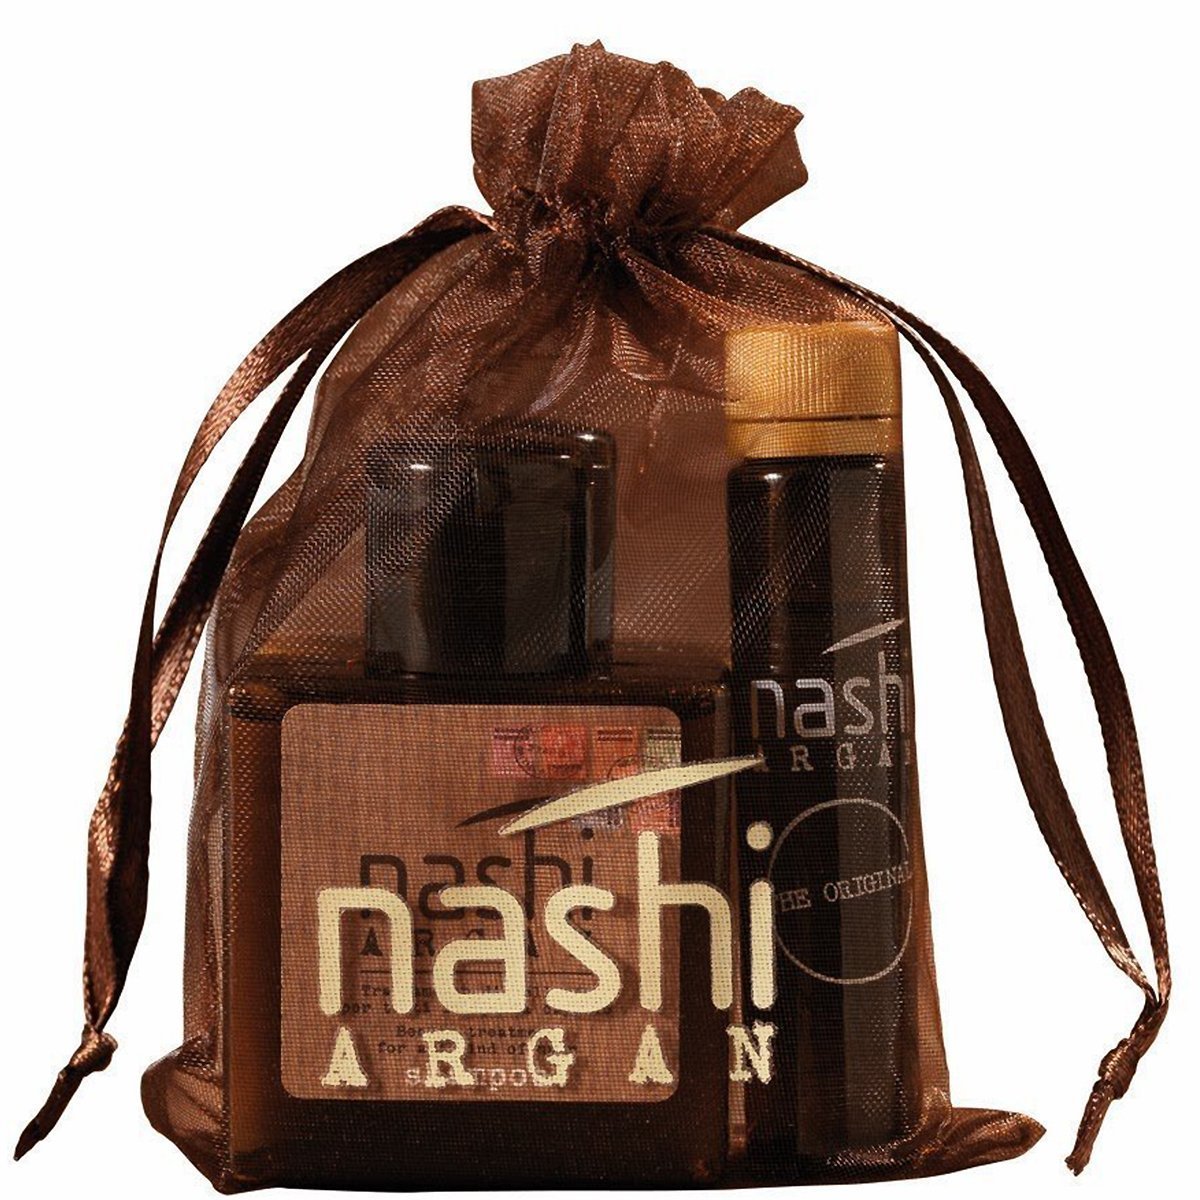 Nashi. Nashi Argan Travel Set. Nashi Argan дорожный набор для волос. Nashi Argan крем для волос. Мини наборы nashi Argan.